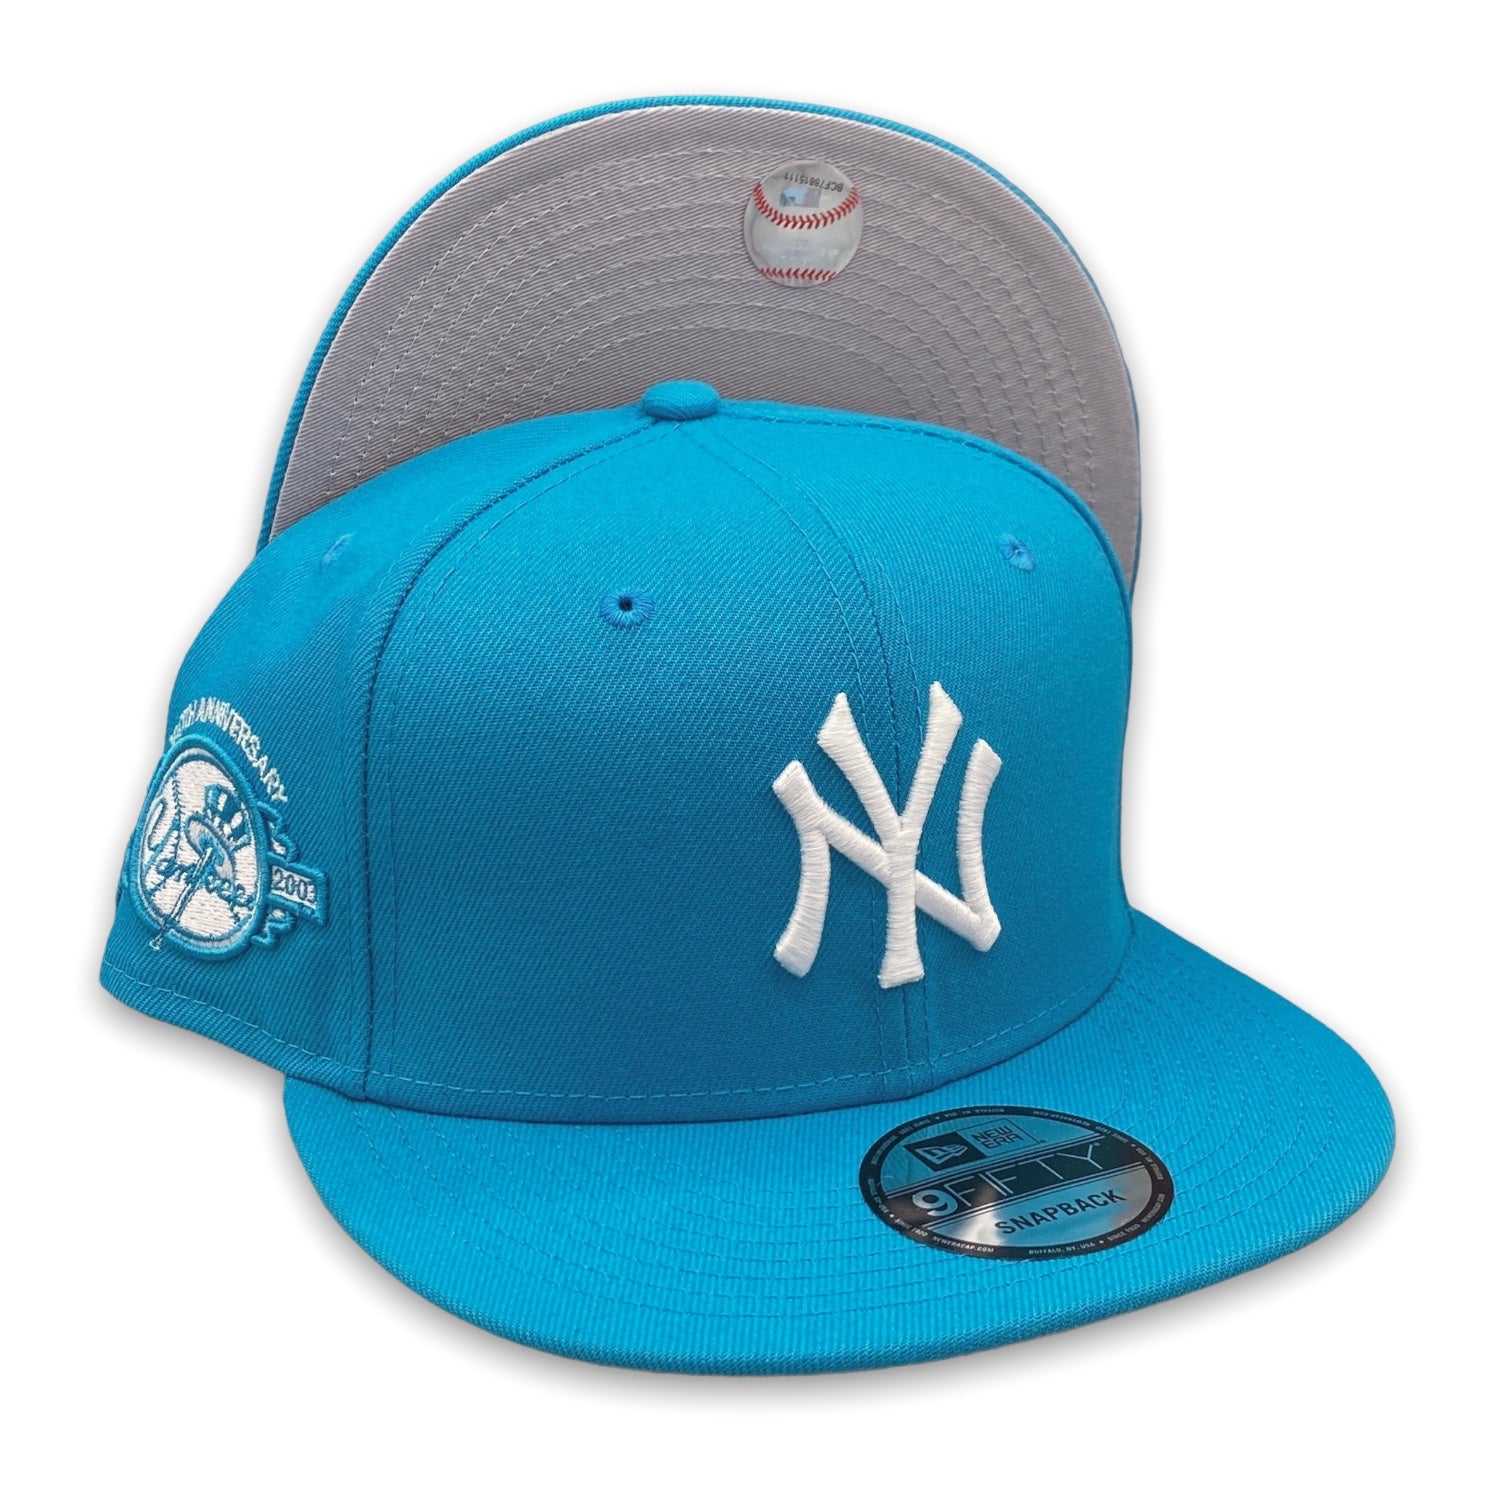 Cap New Era New York Yankees League Essential 9FIFTY Snapback Cap